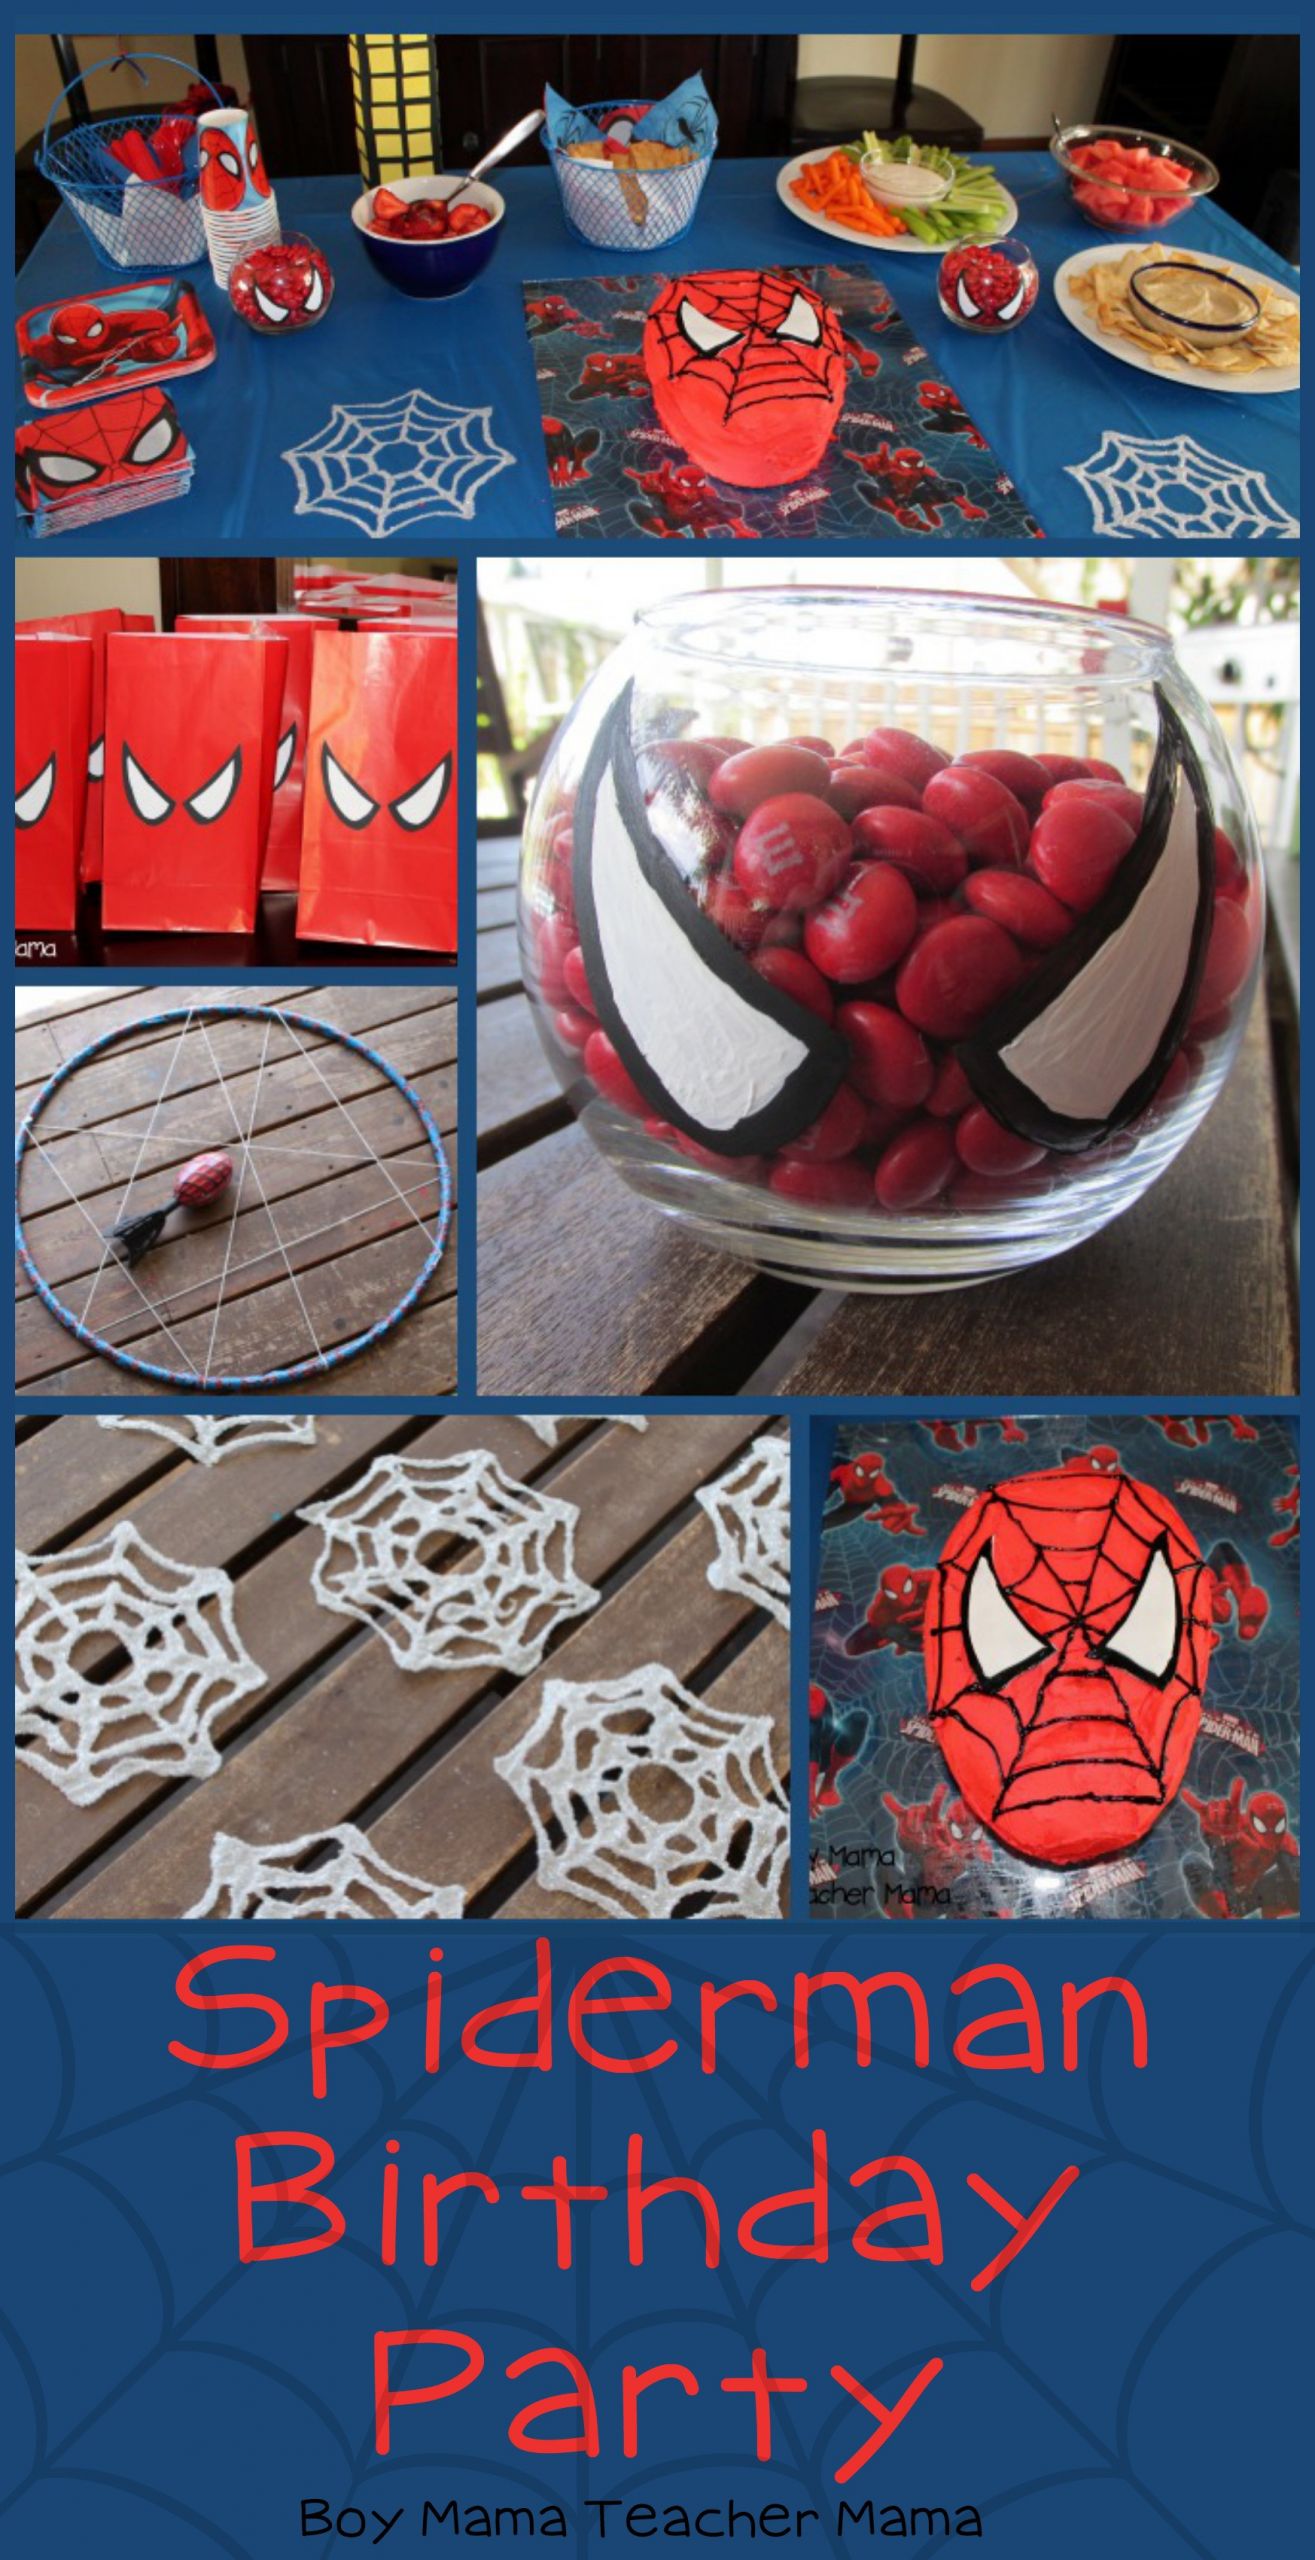 Spiderman Birthday Party Decorations
 Boy Mama Spiderman Birthday Party Boy Mama Teacher Mama